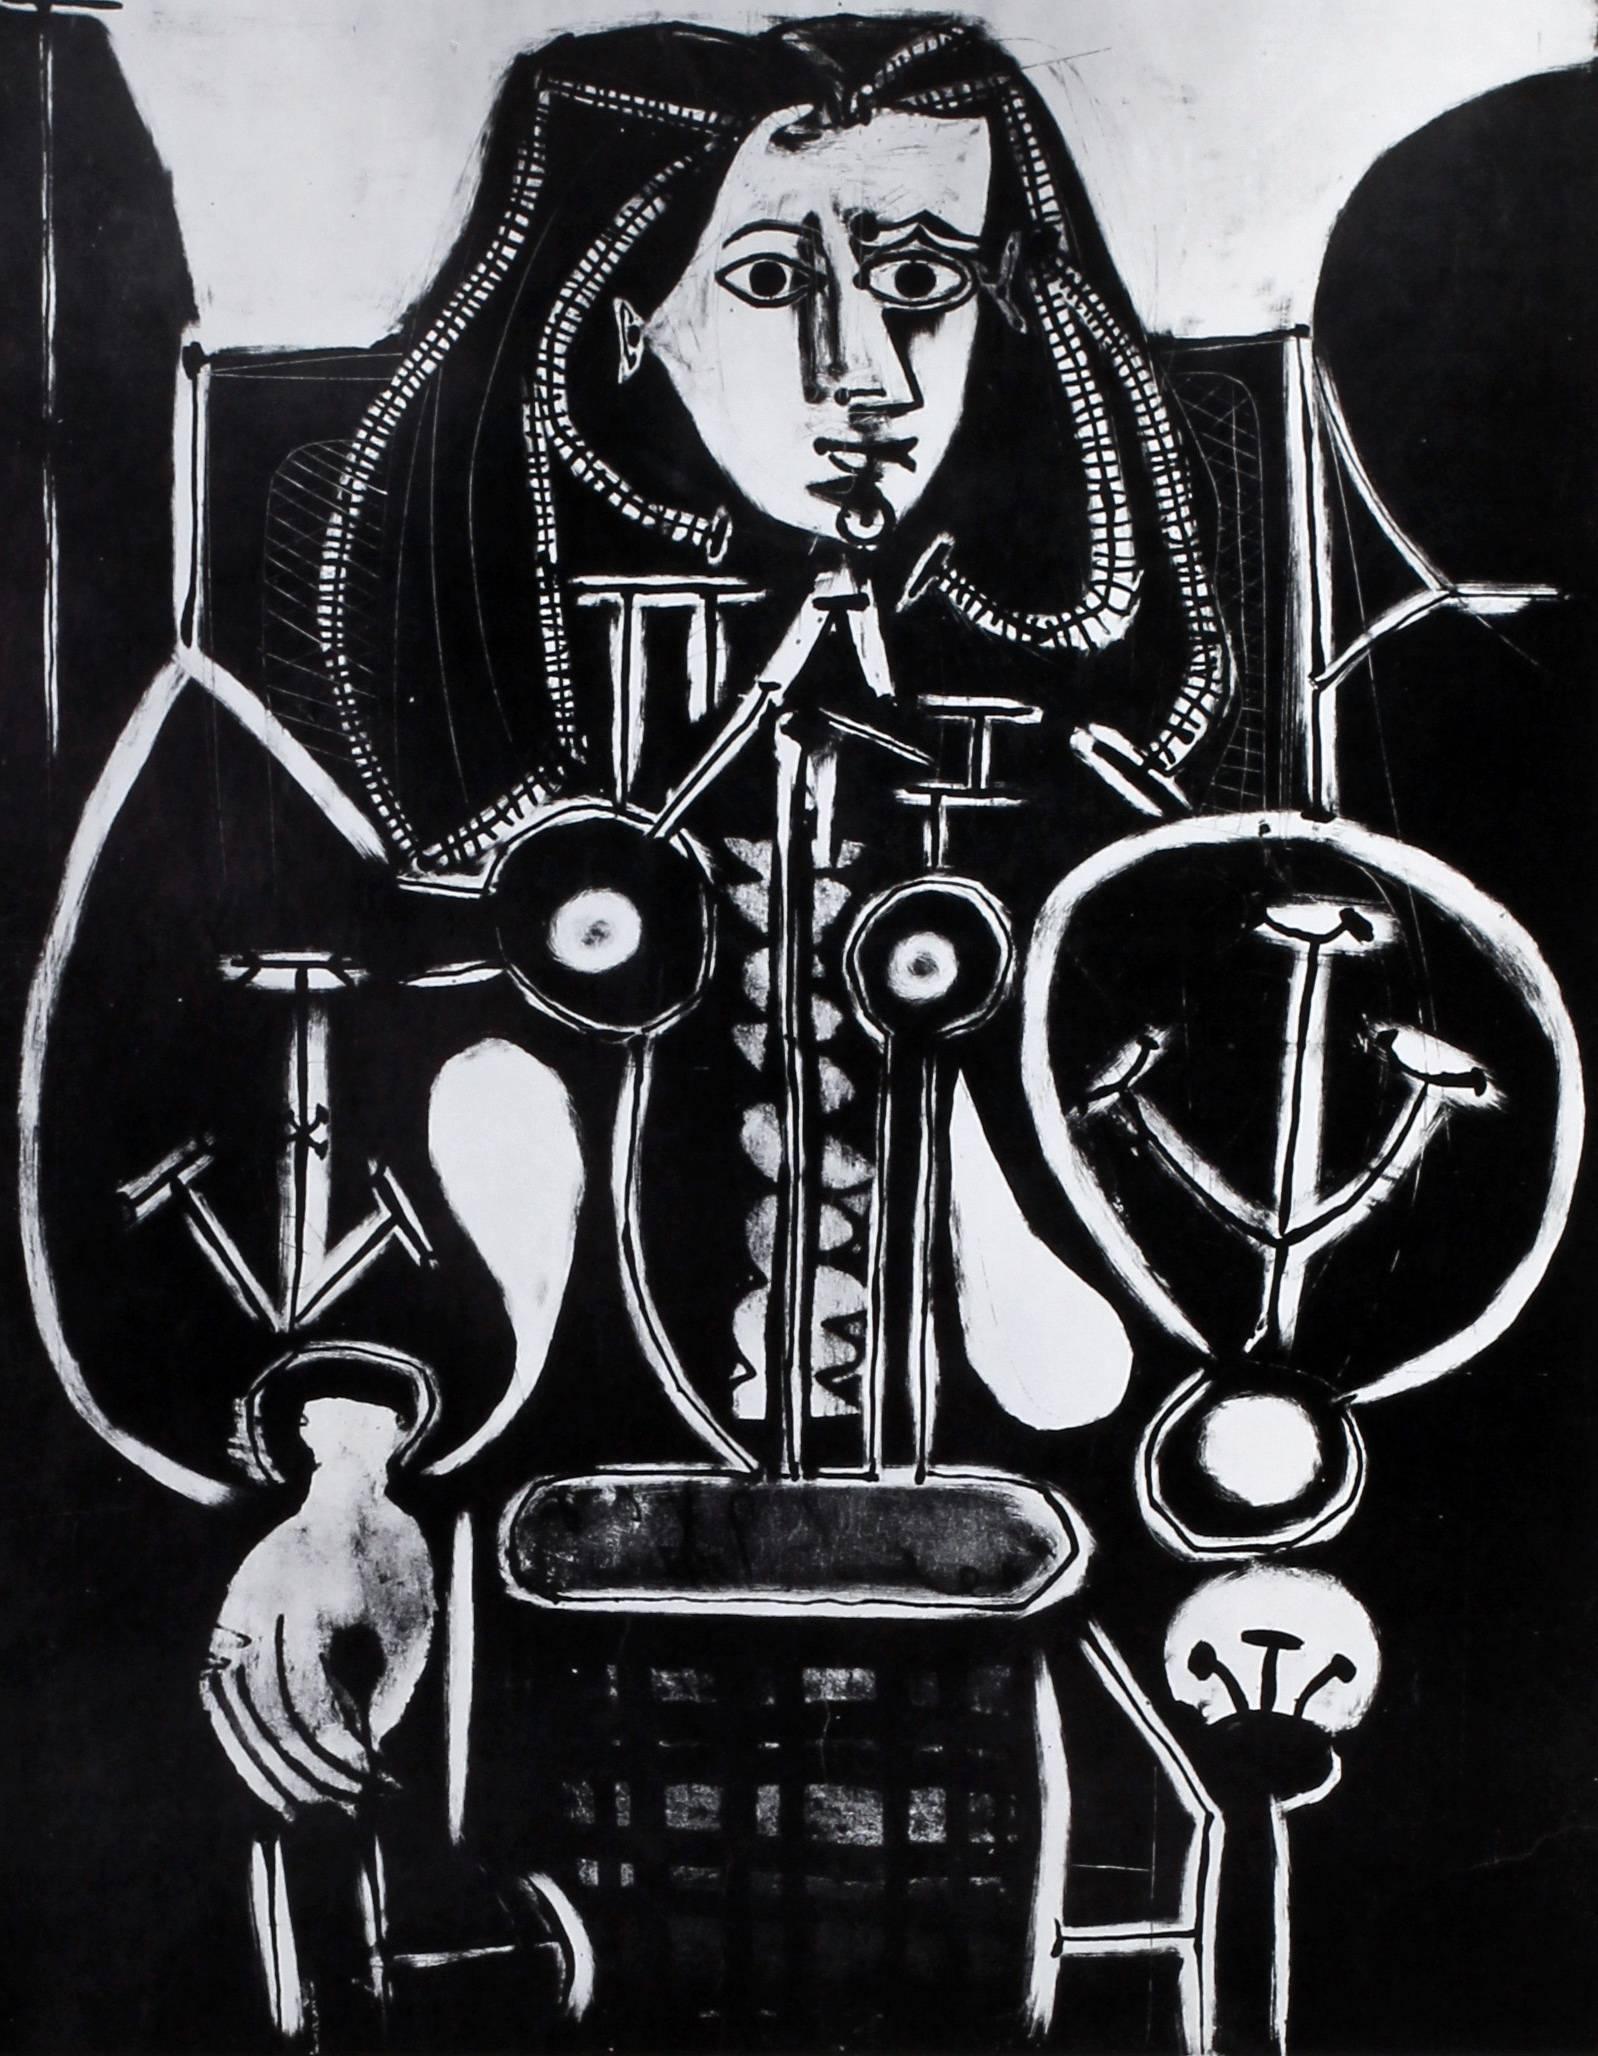 Picasso exhibiton poster for Ville de Luxembourg, Galerie d’art municipal – Villa Vauban. 1982

37.1/2 x 24.3/4in. (95.3 x 62.8cm.) (including frame)